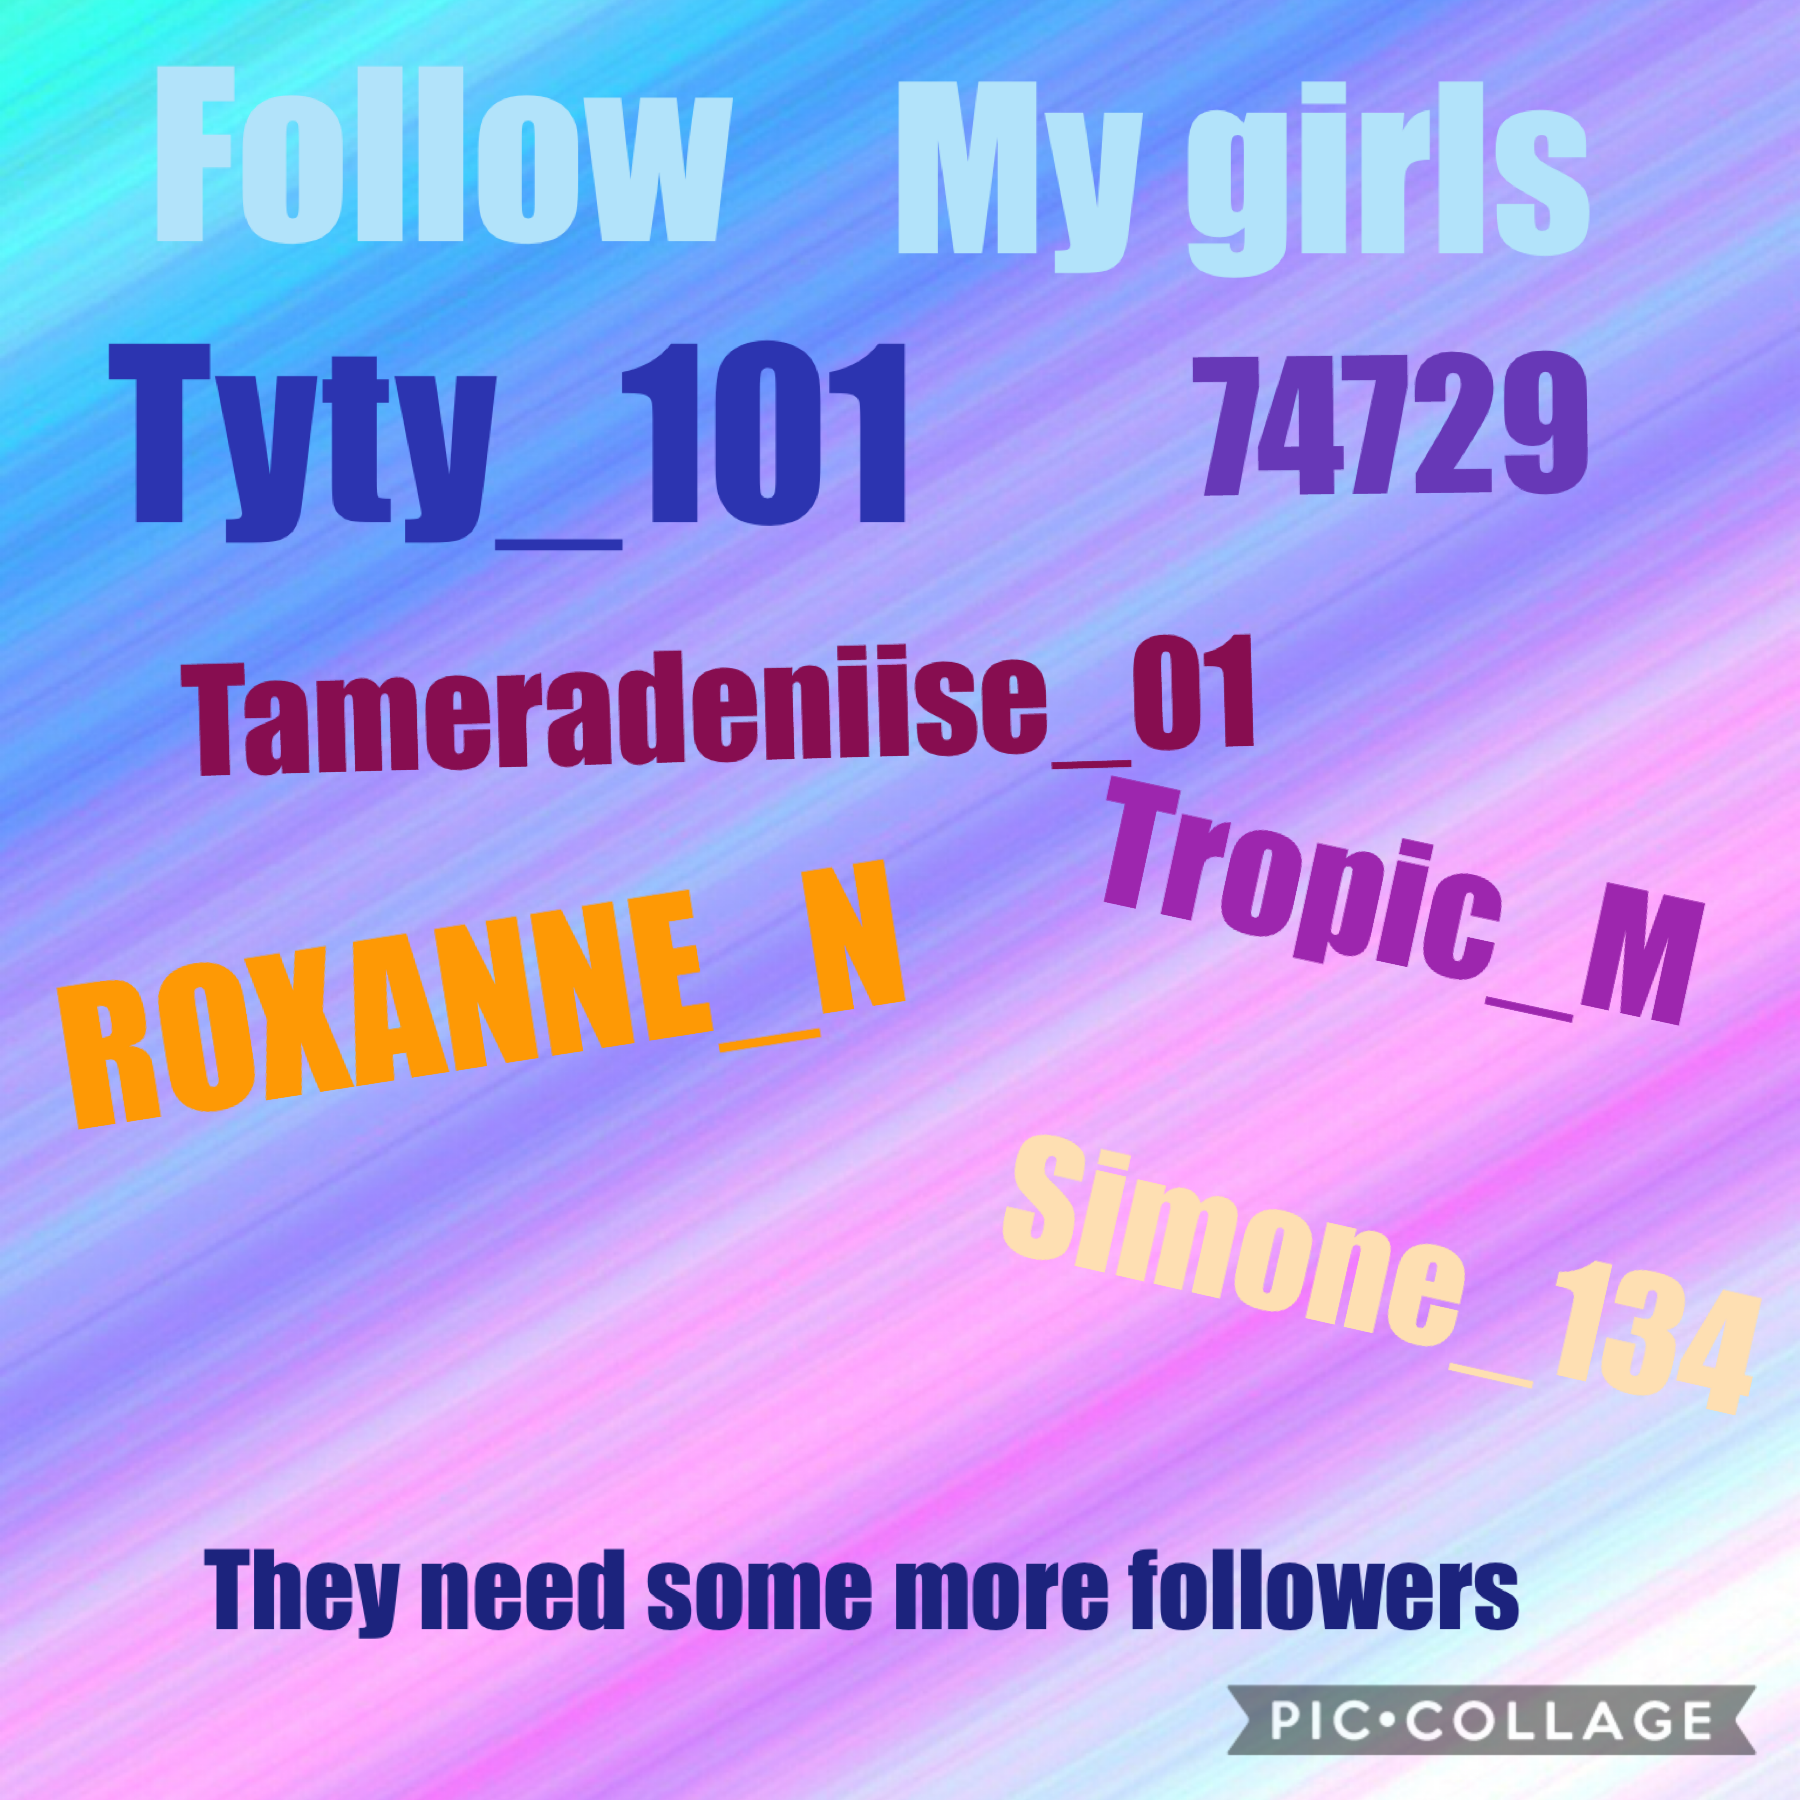 Pl go follow them 